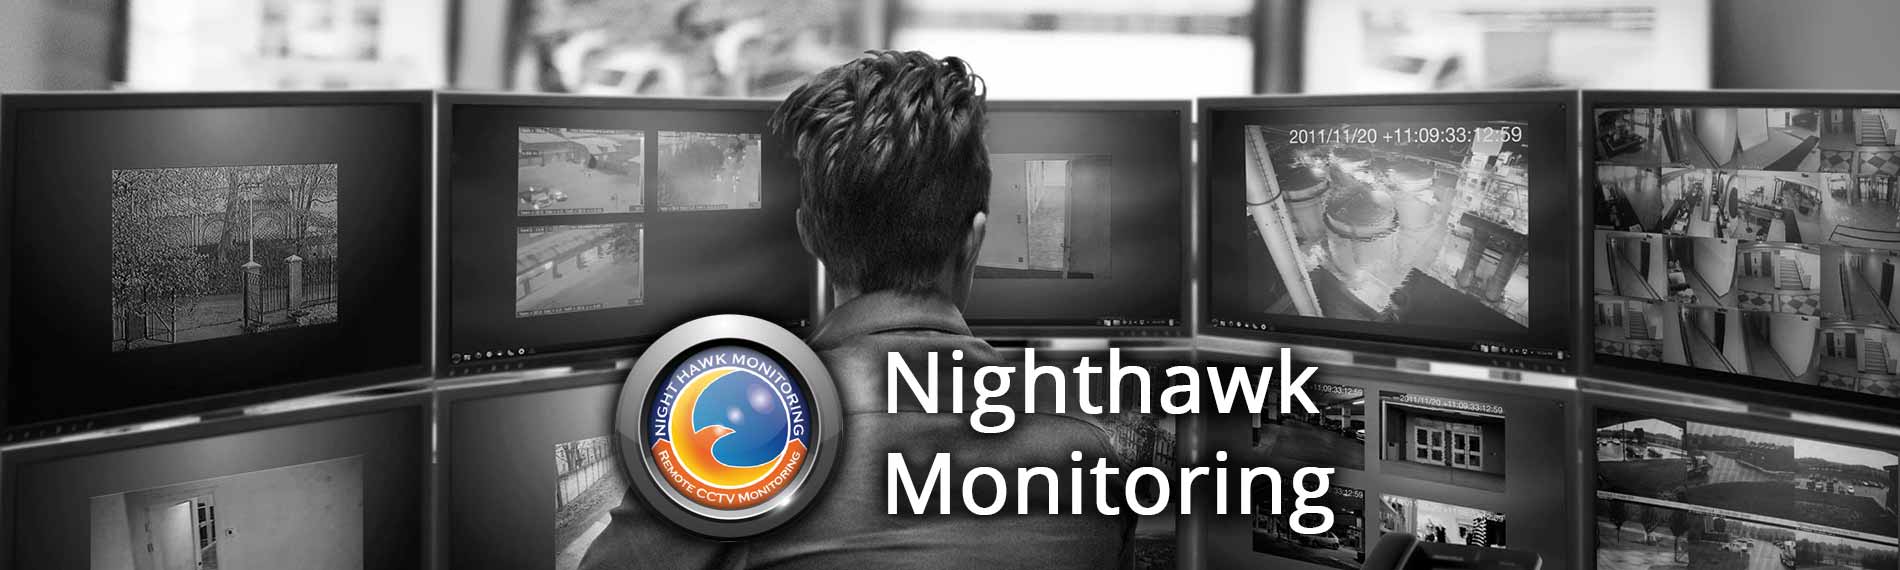 Remote Video Surveillance Seattle WA - Seattle Remote Video Surveillance Monitoring - Live Security Cameras Monitoring Seattle - Washington